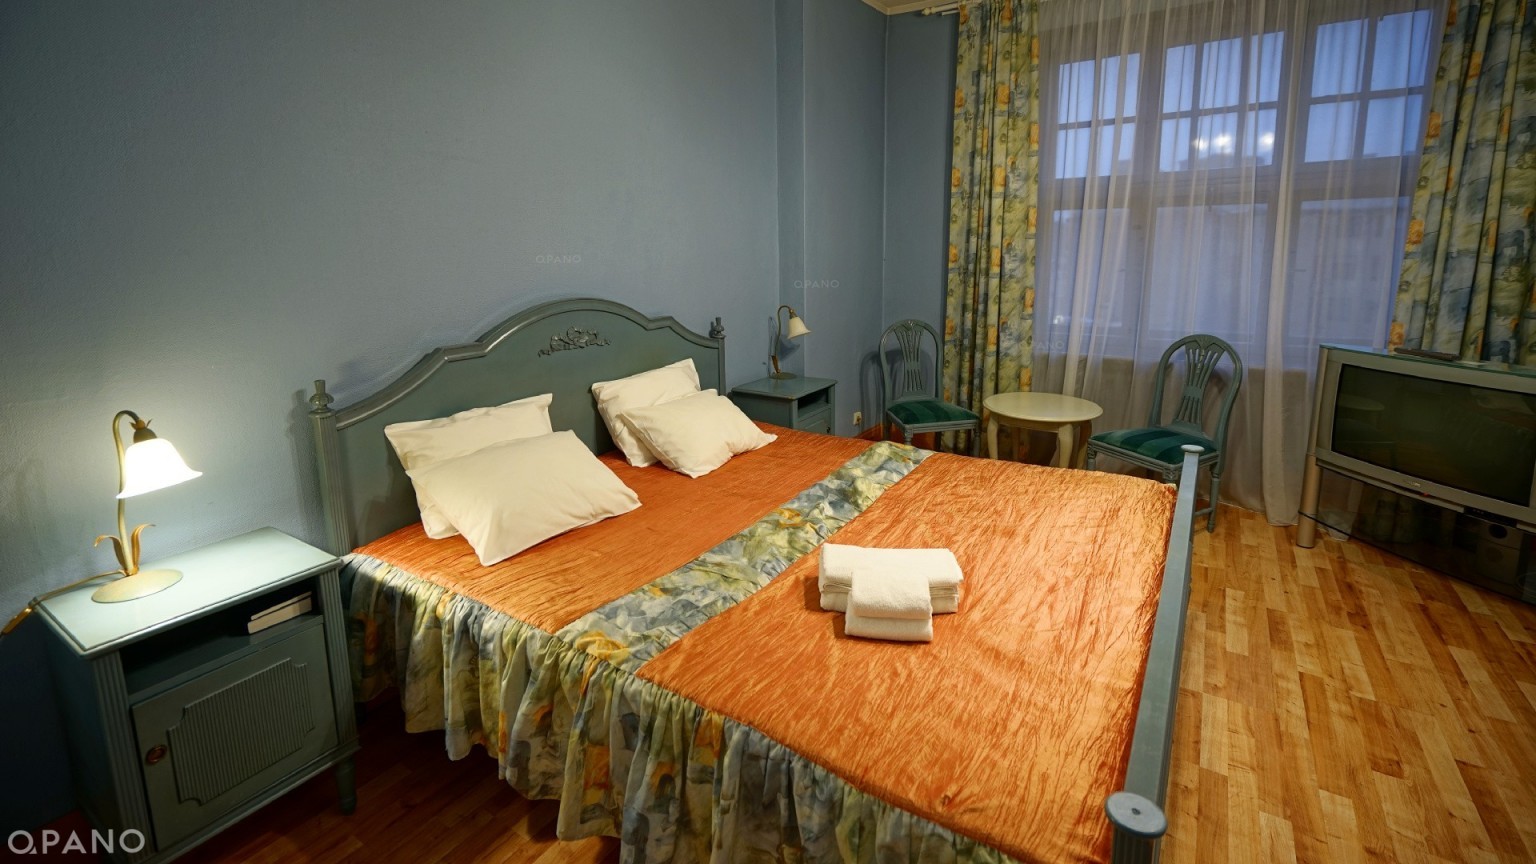 QPANO:Hotel Viktorija - Rooms